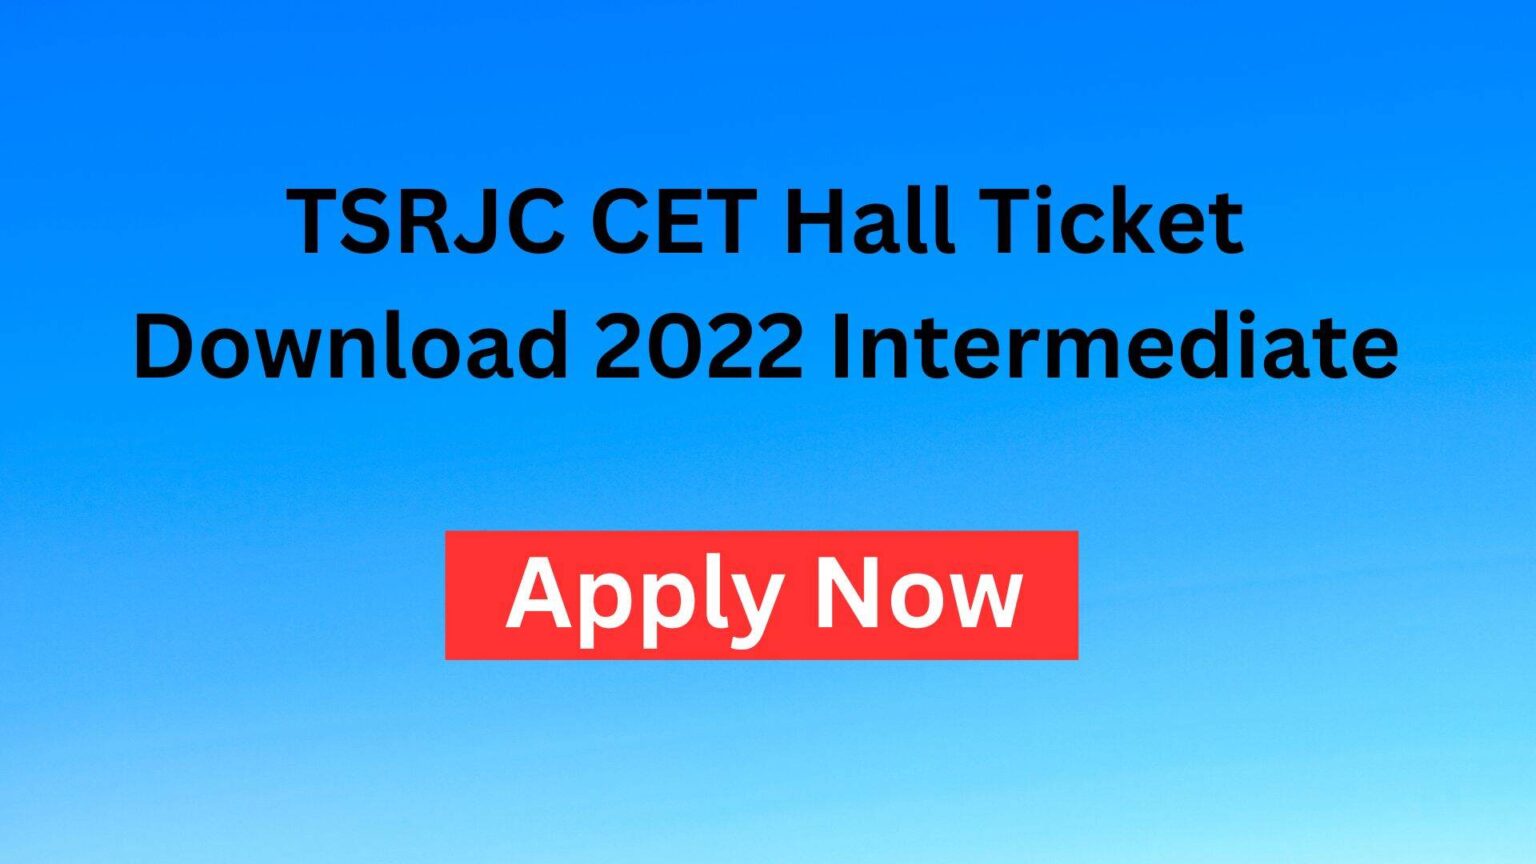 TSRJC CET Hall Ticket Download 2022 Intermediate